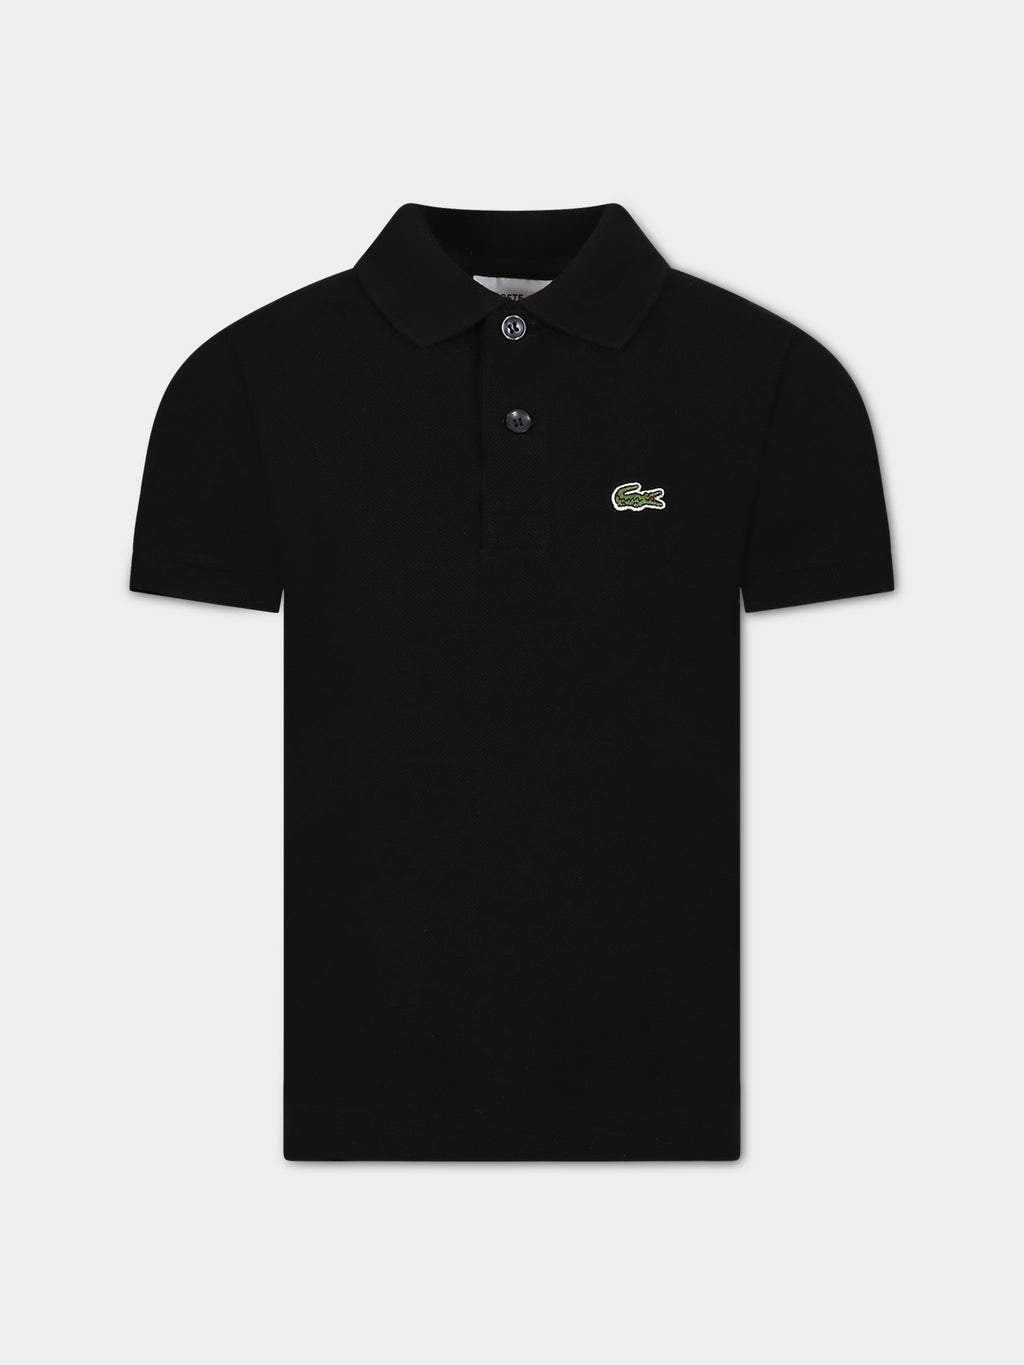 Black polo shirt for boy with green crocodile